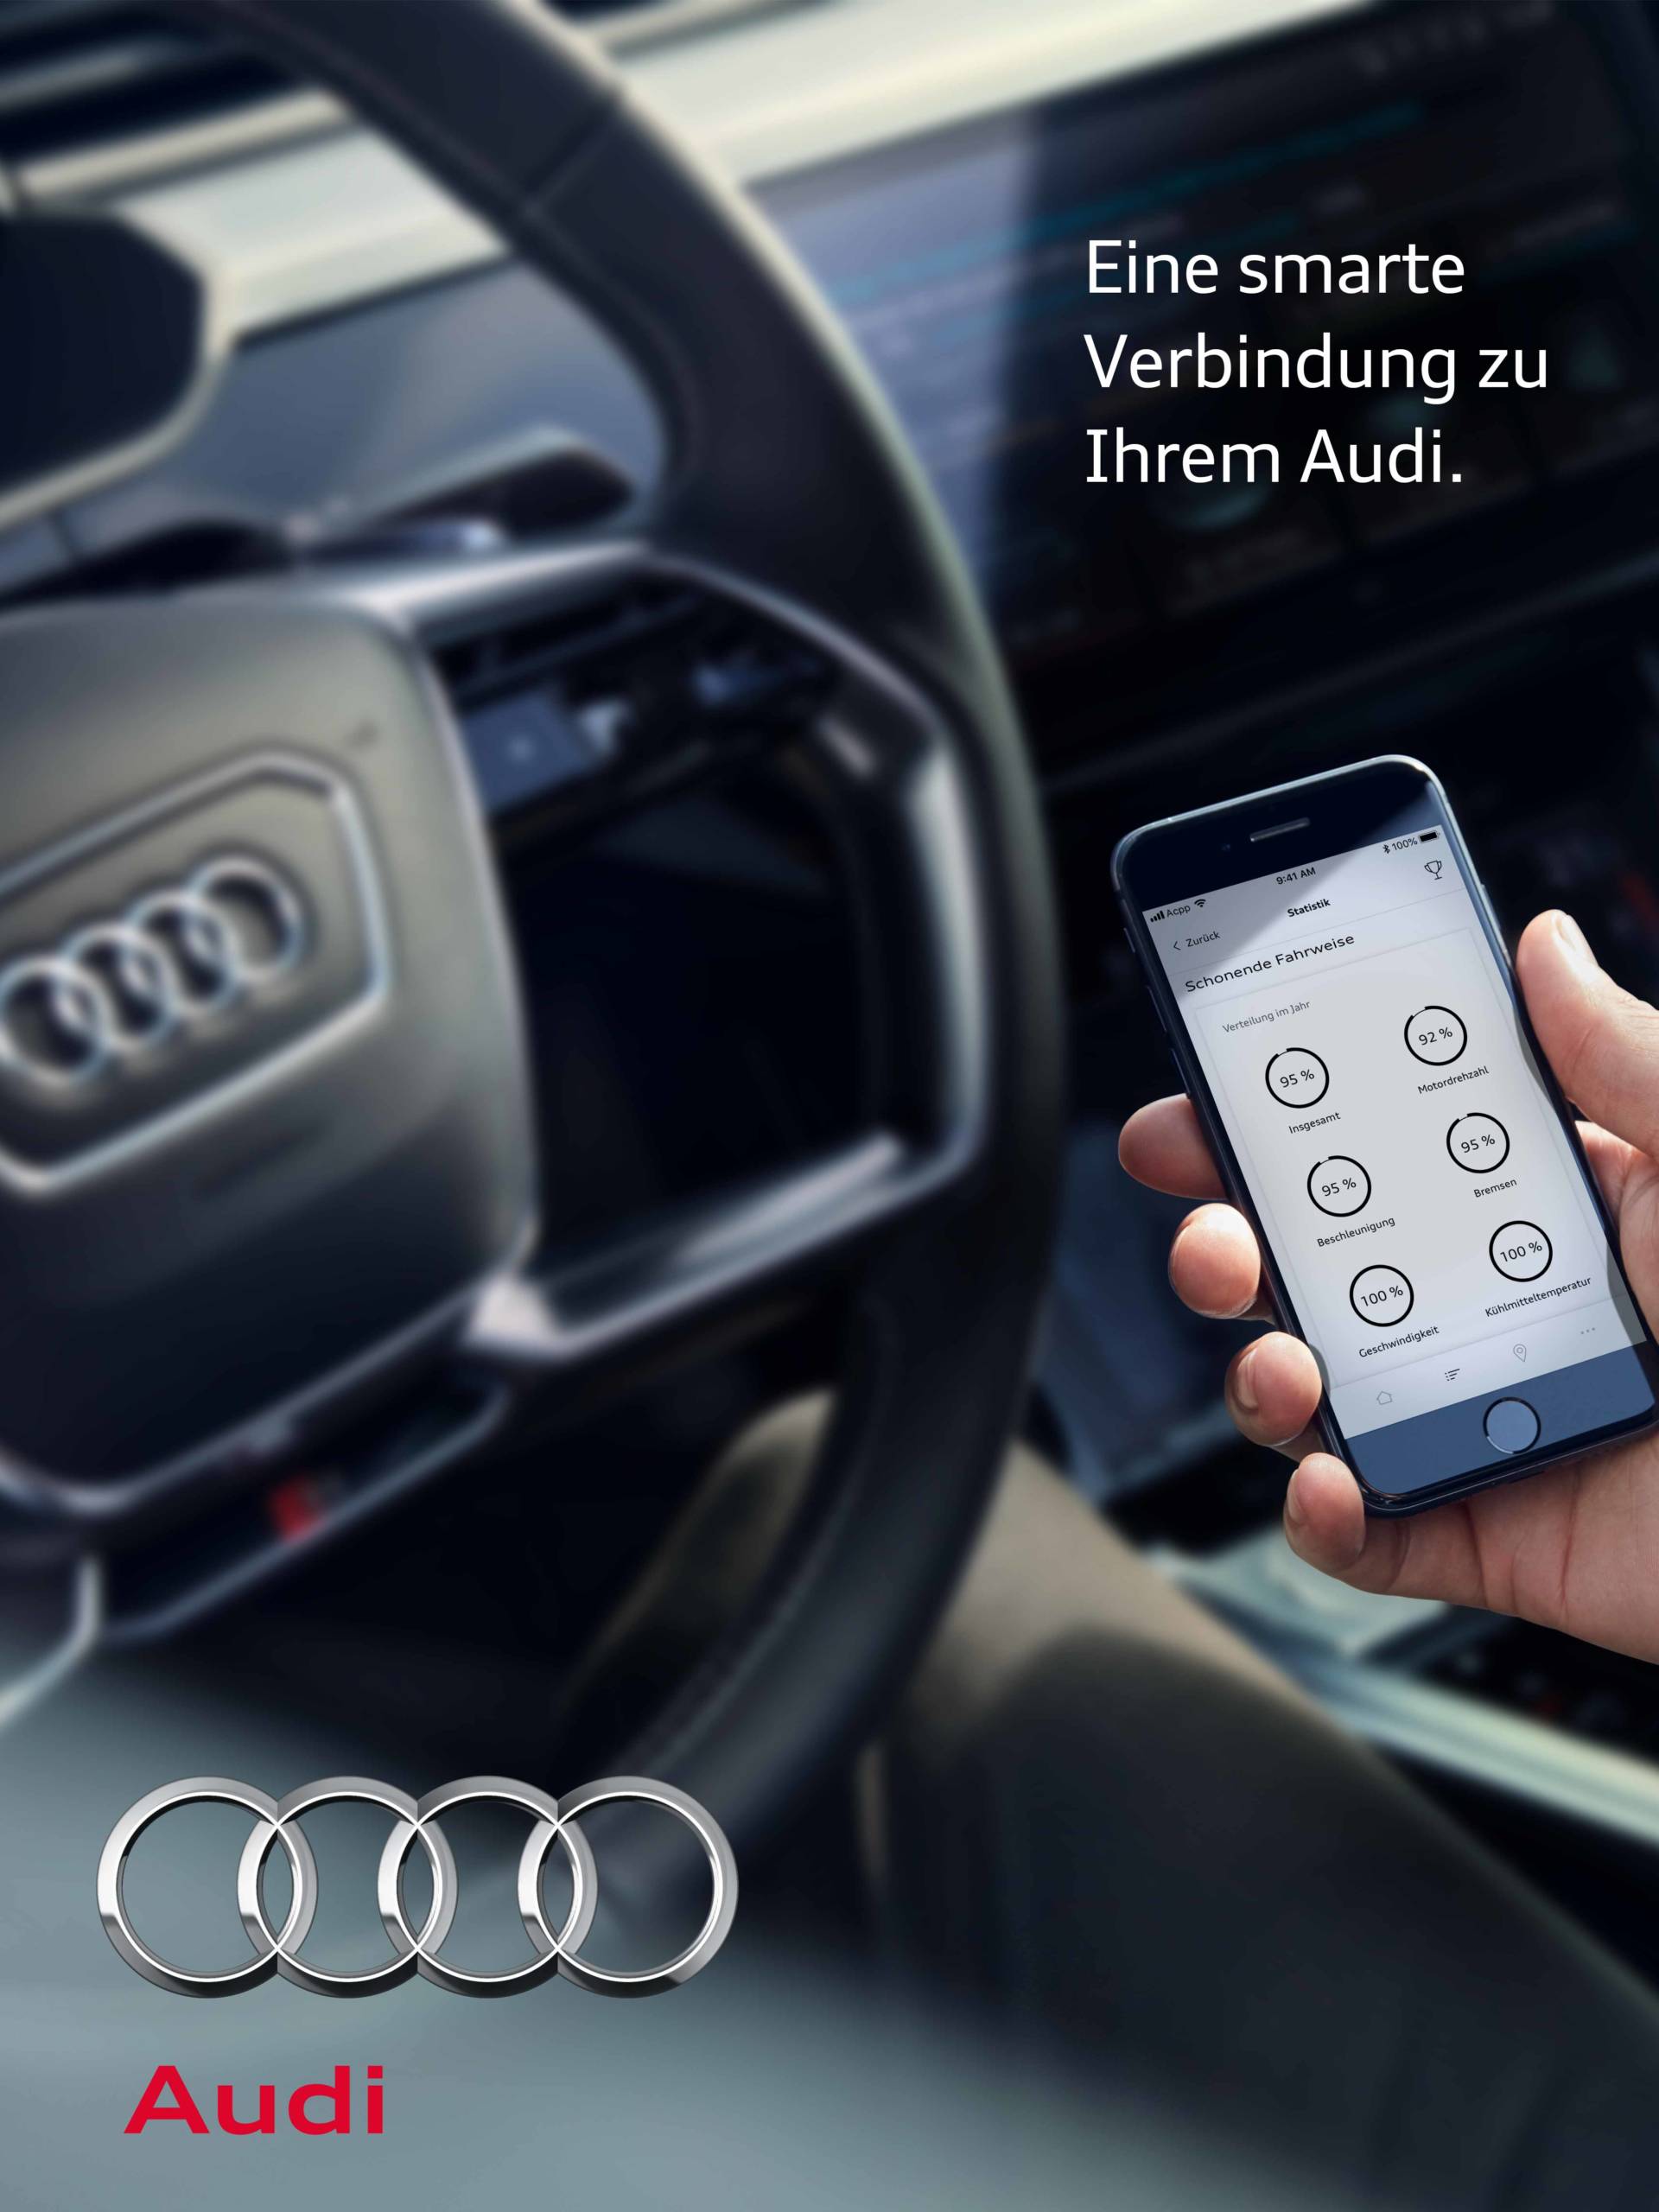 Audi DataPlug Connectivity Upgrade Original Zubehör